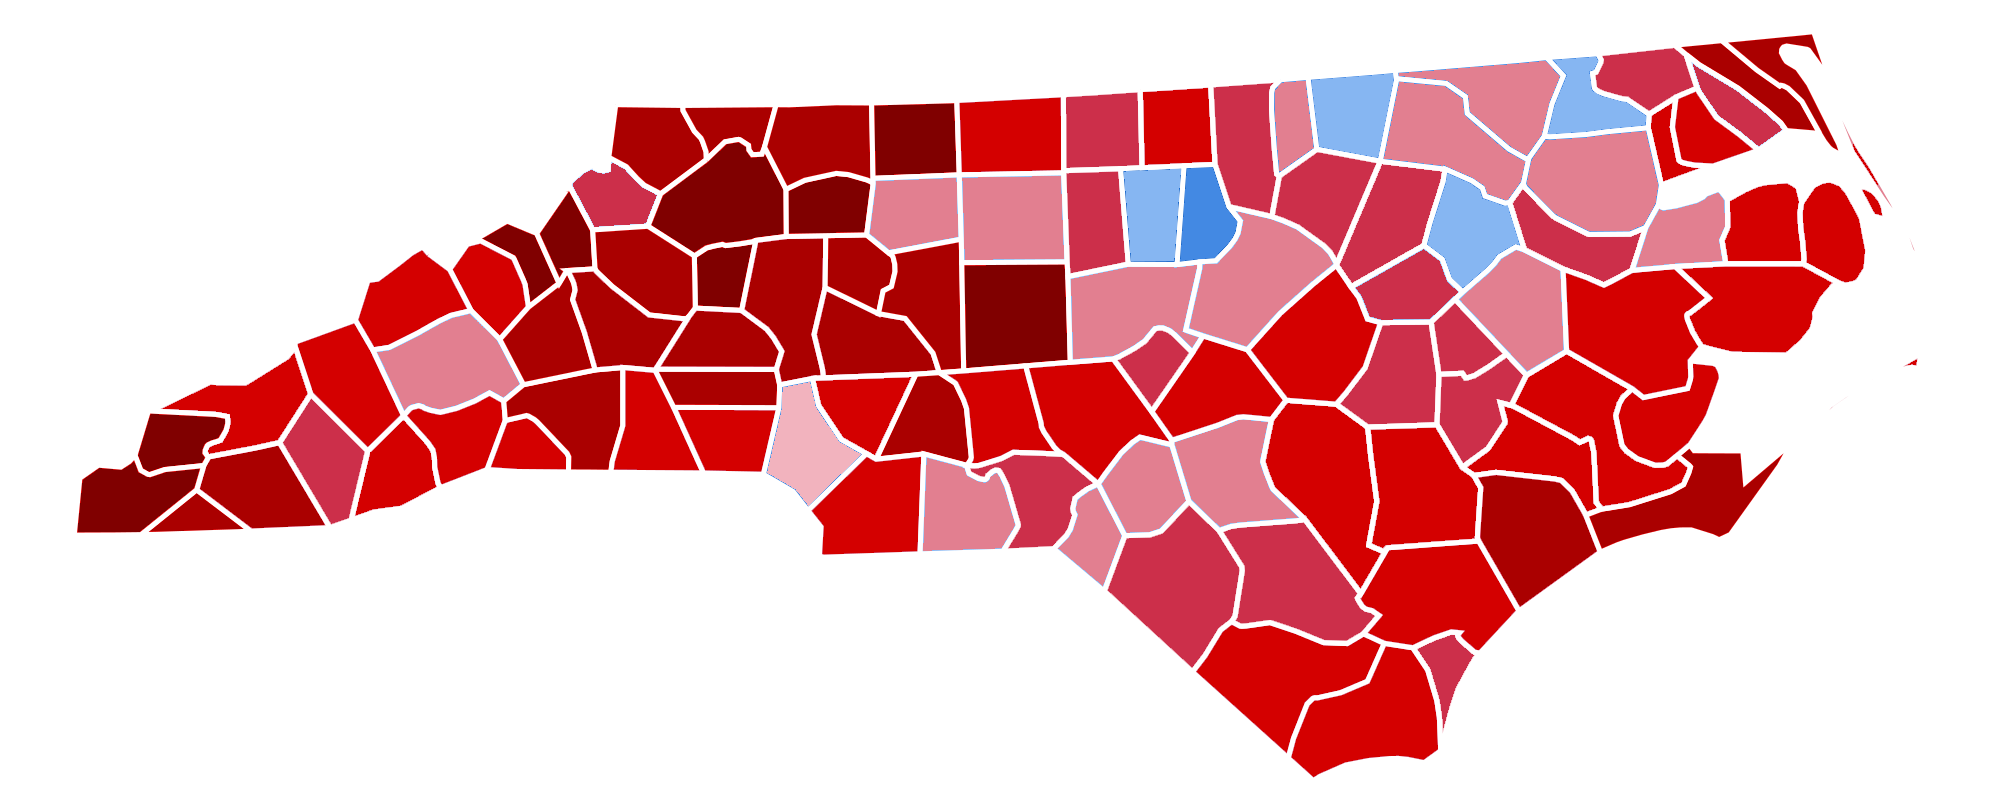 2000px-North_Carolina_Presidential_Election_Results_2016_Republican_Landslide_15.06%.png